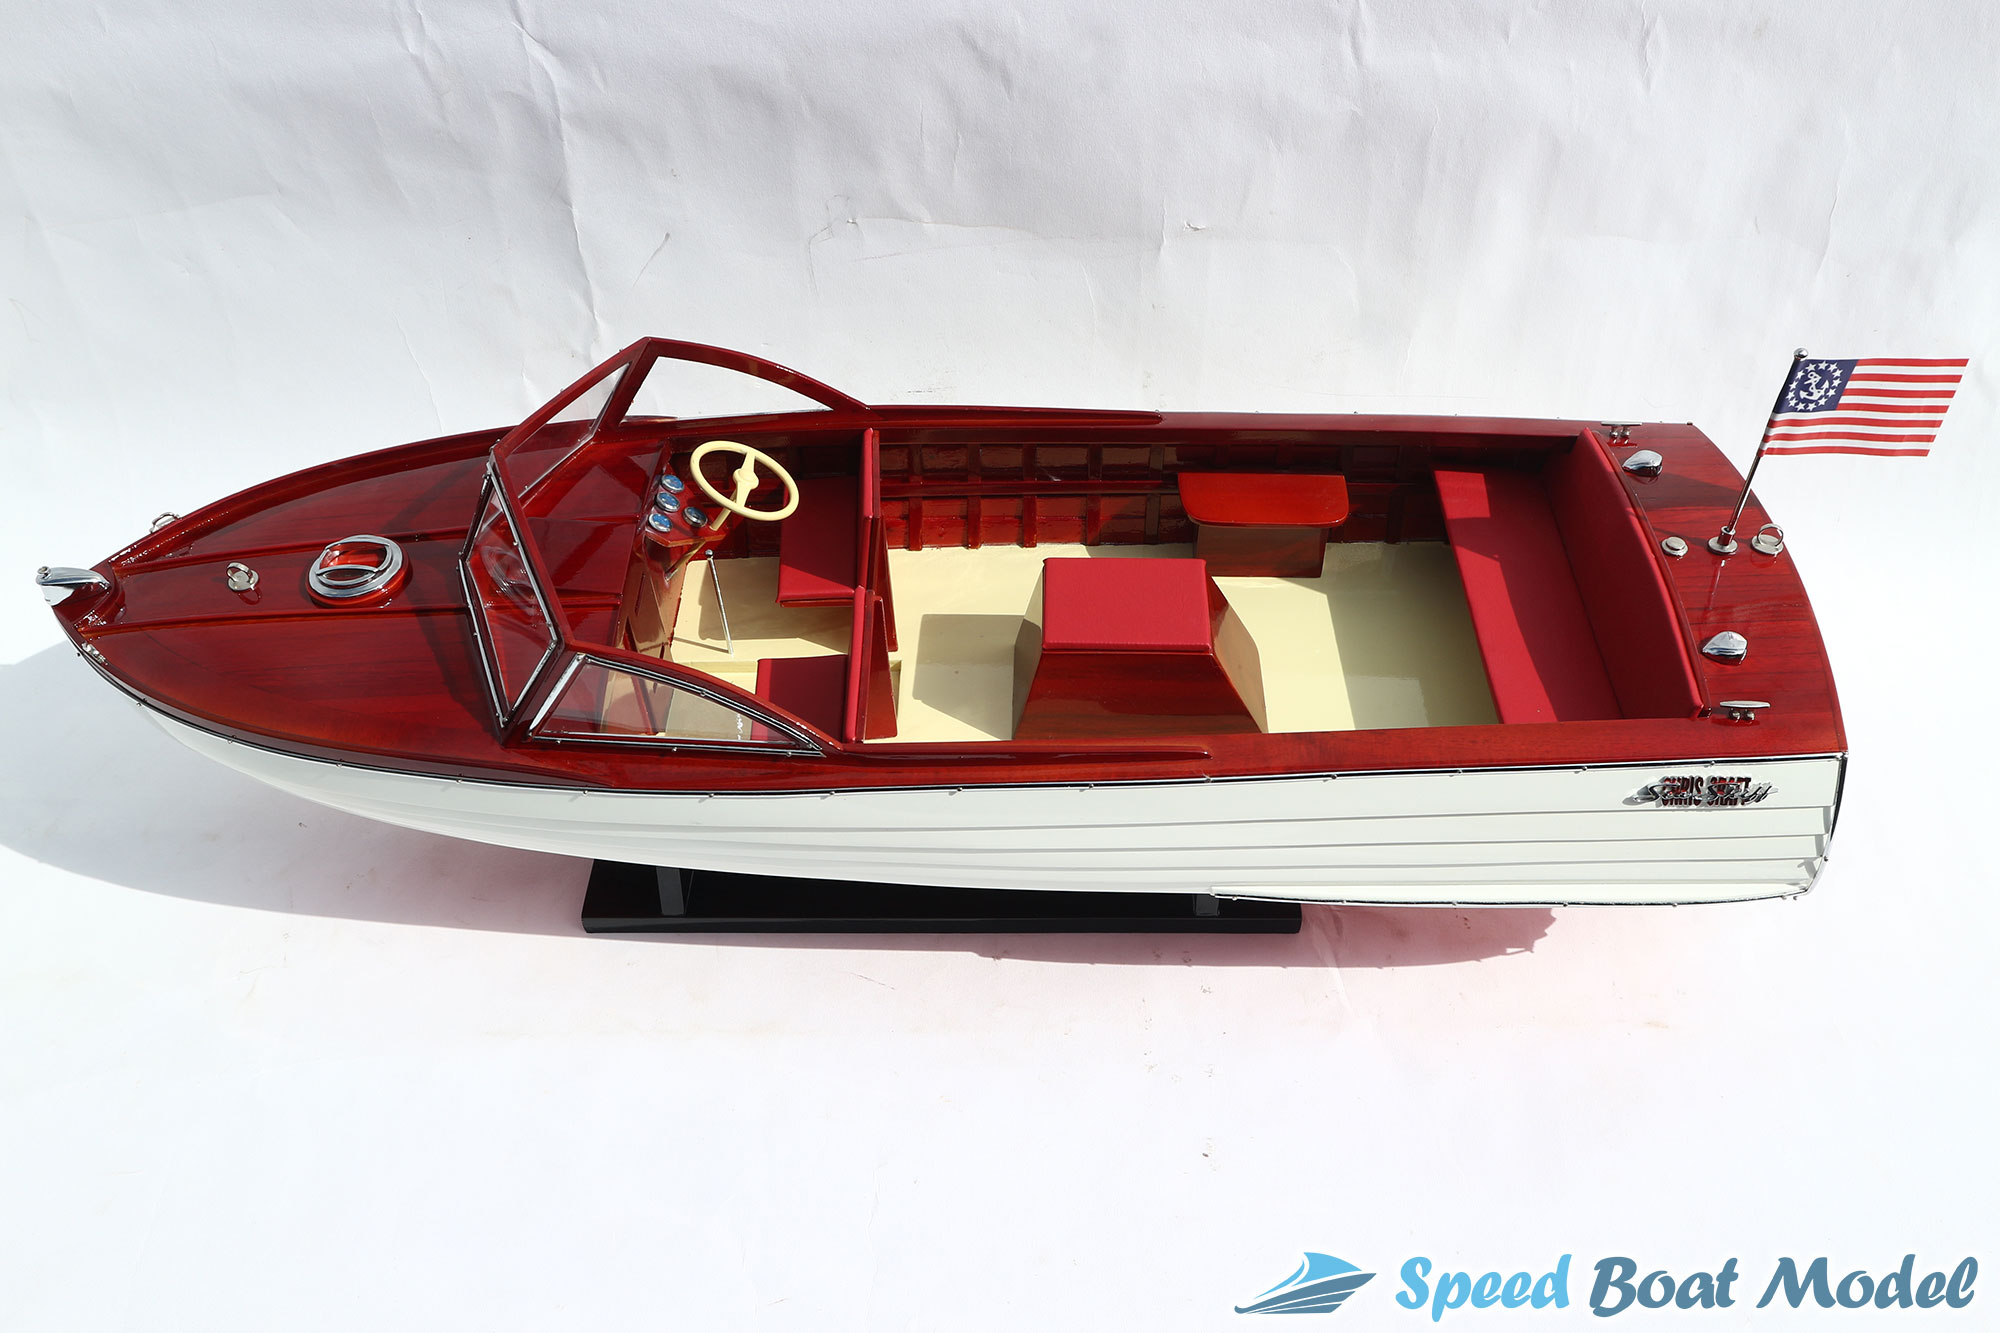 Chris Craft Sea Skiff Speed Boat Model 26.3"